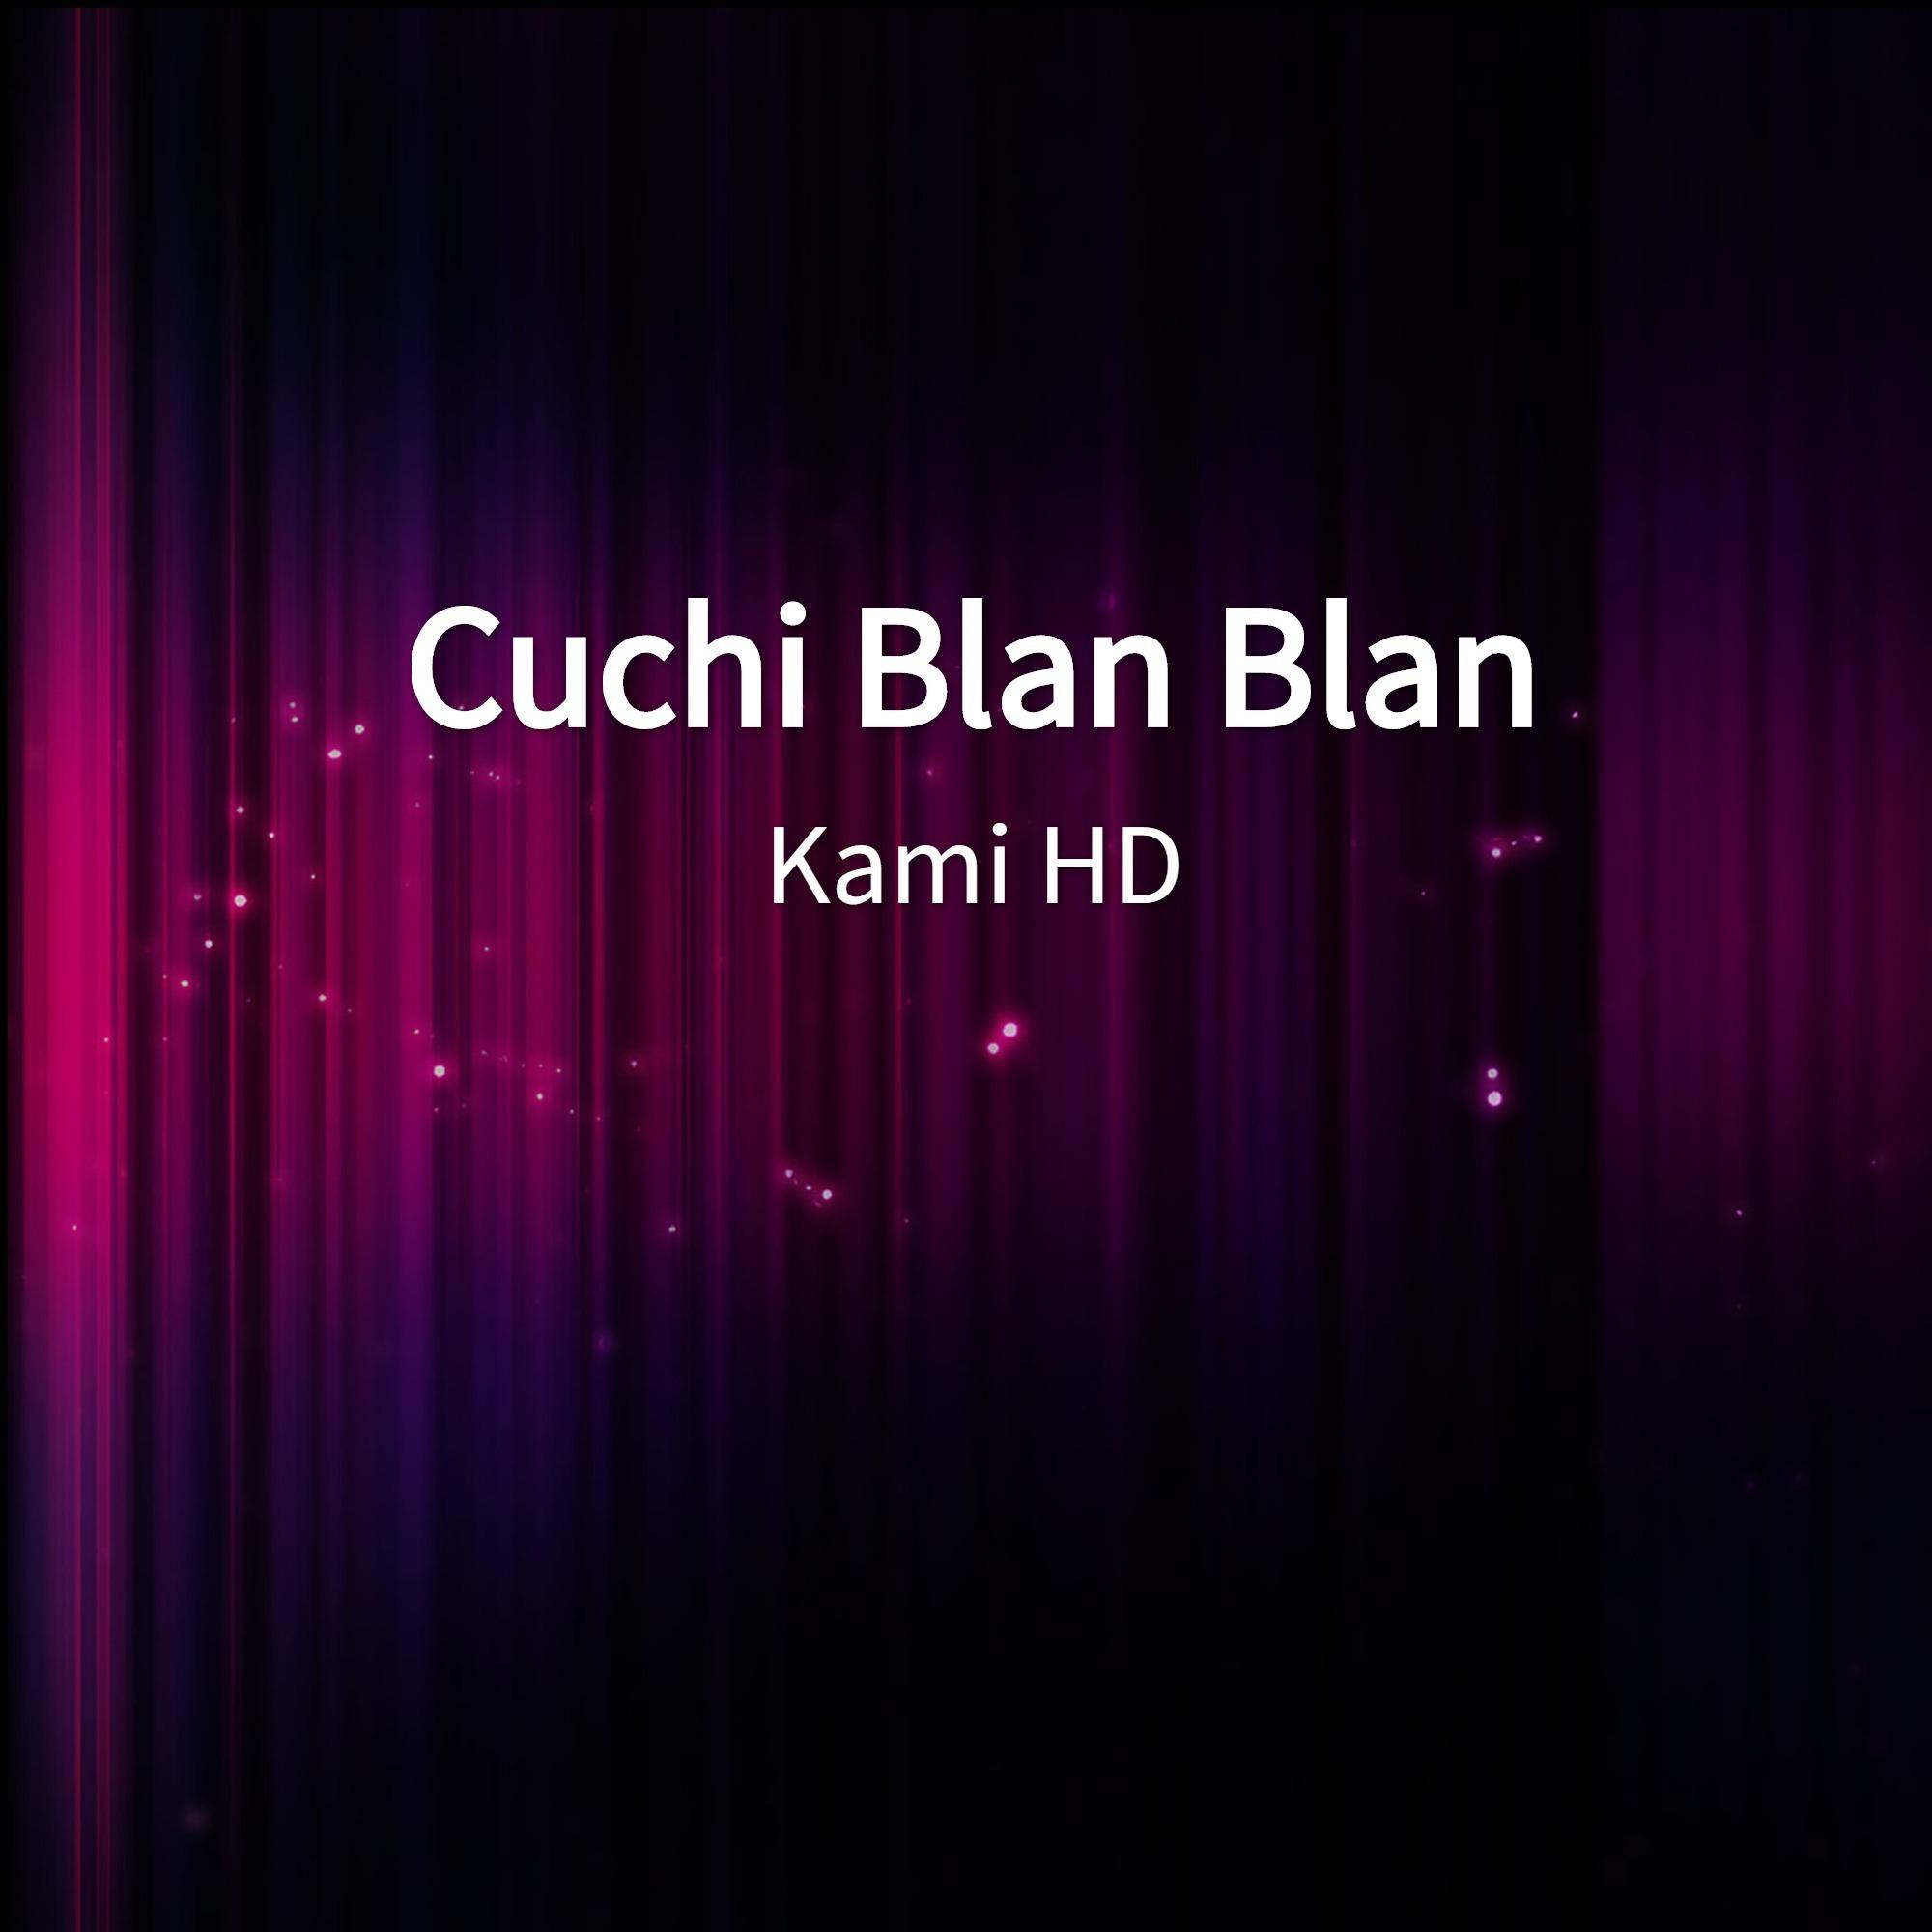 Kami HD - Cuchi Blan Blan